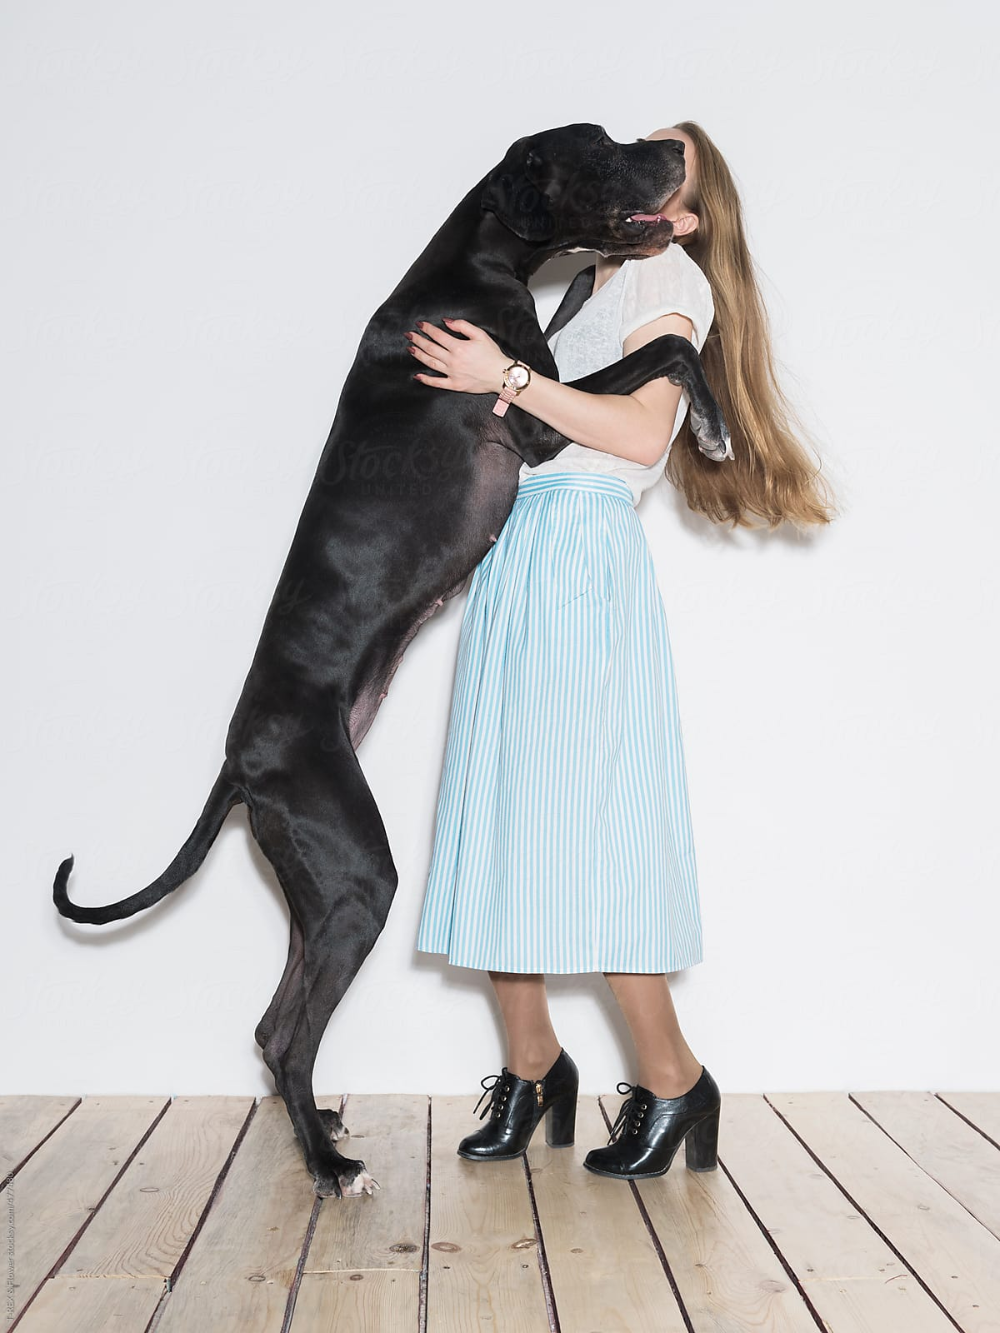 Woman And Her Big Dog by Stocksy Contributor Danil Nevsky | Big dogs,  Dogs, Women